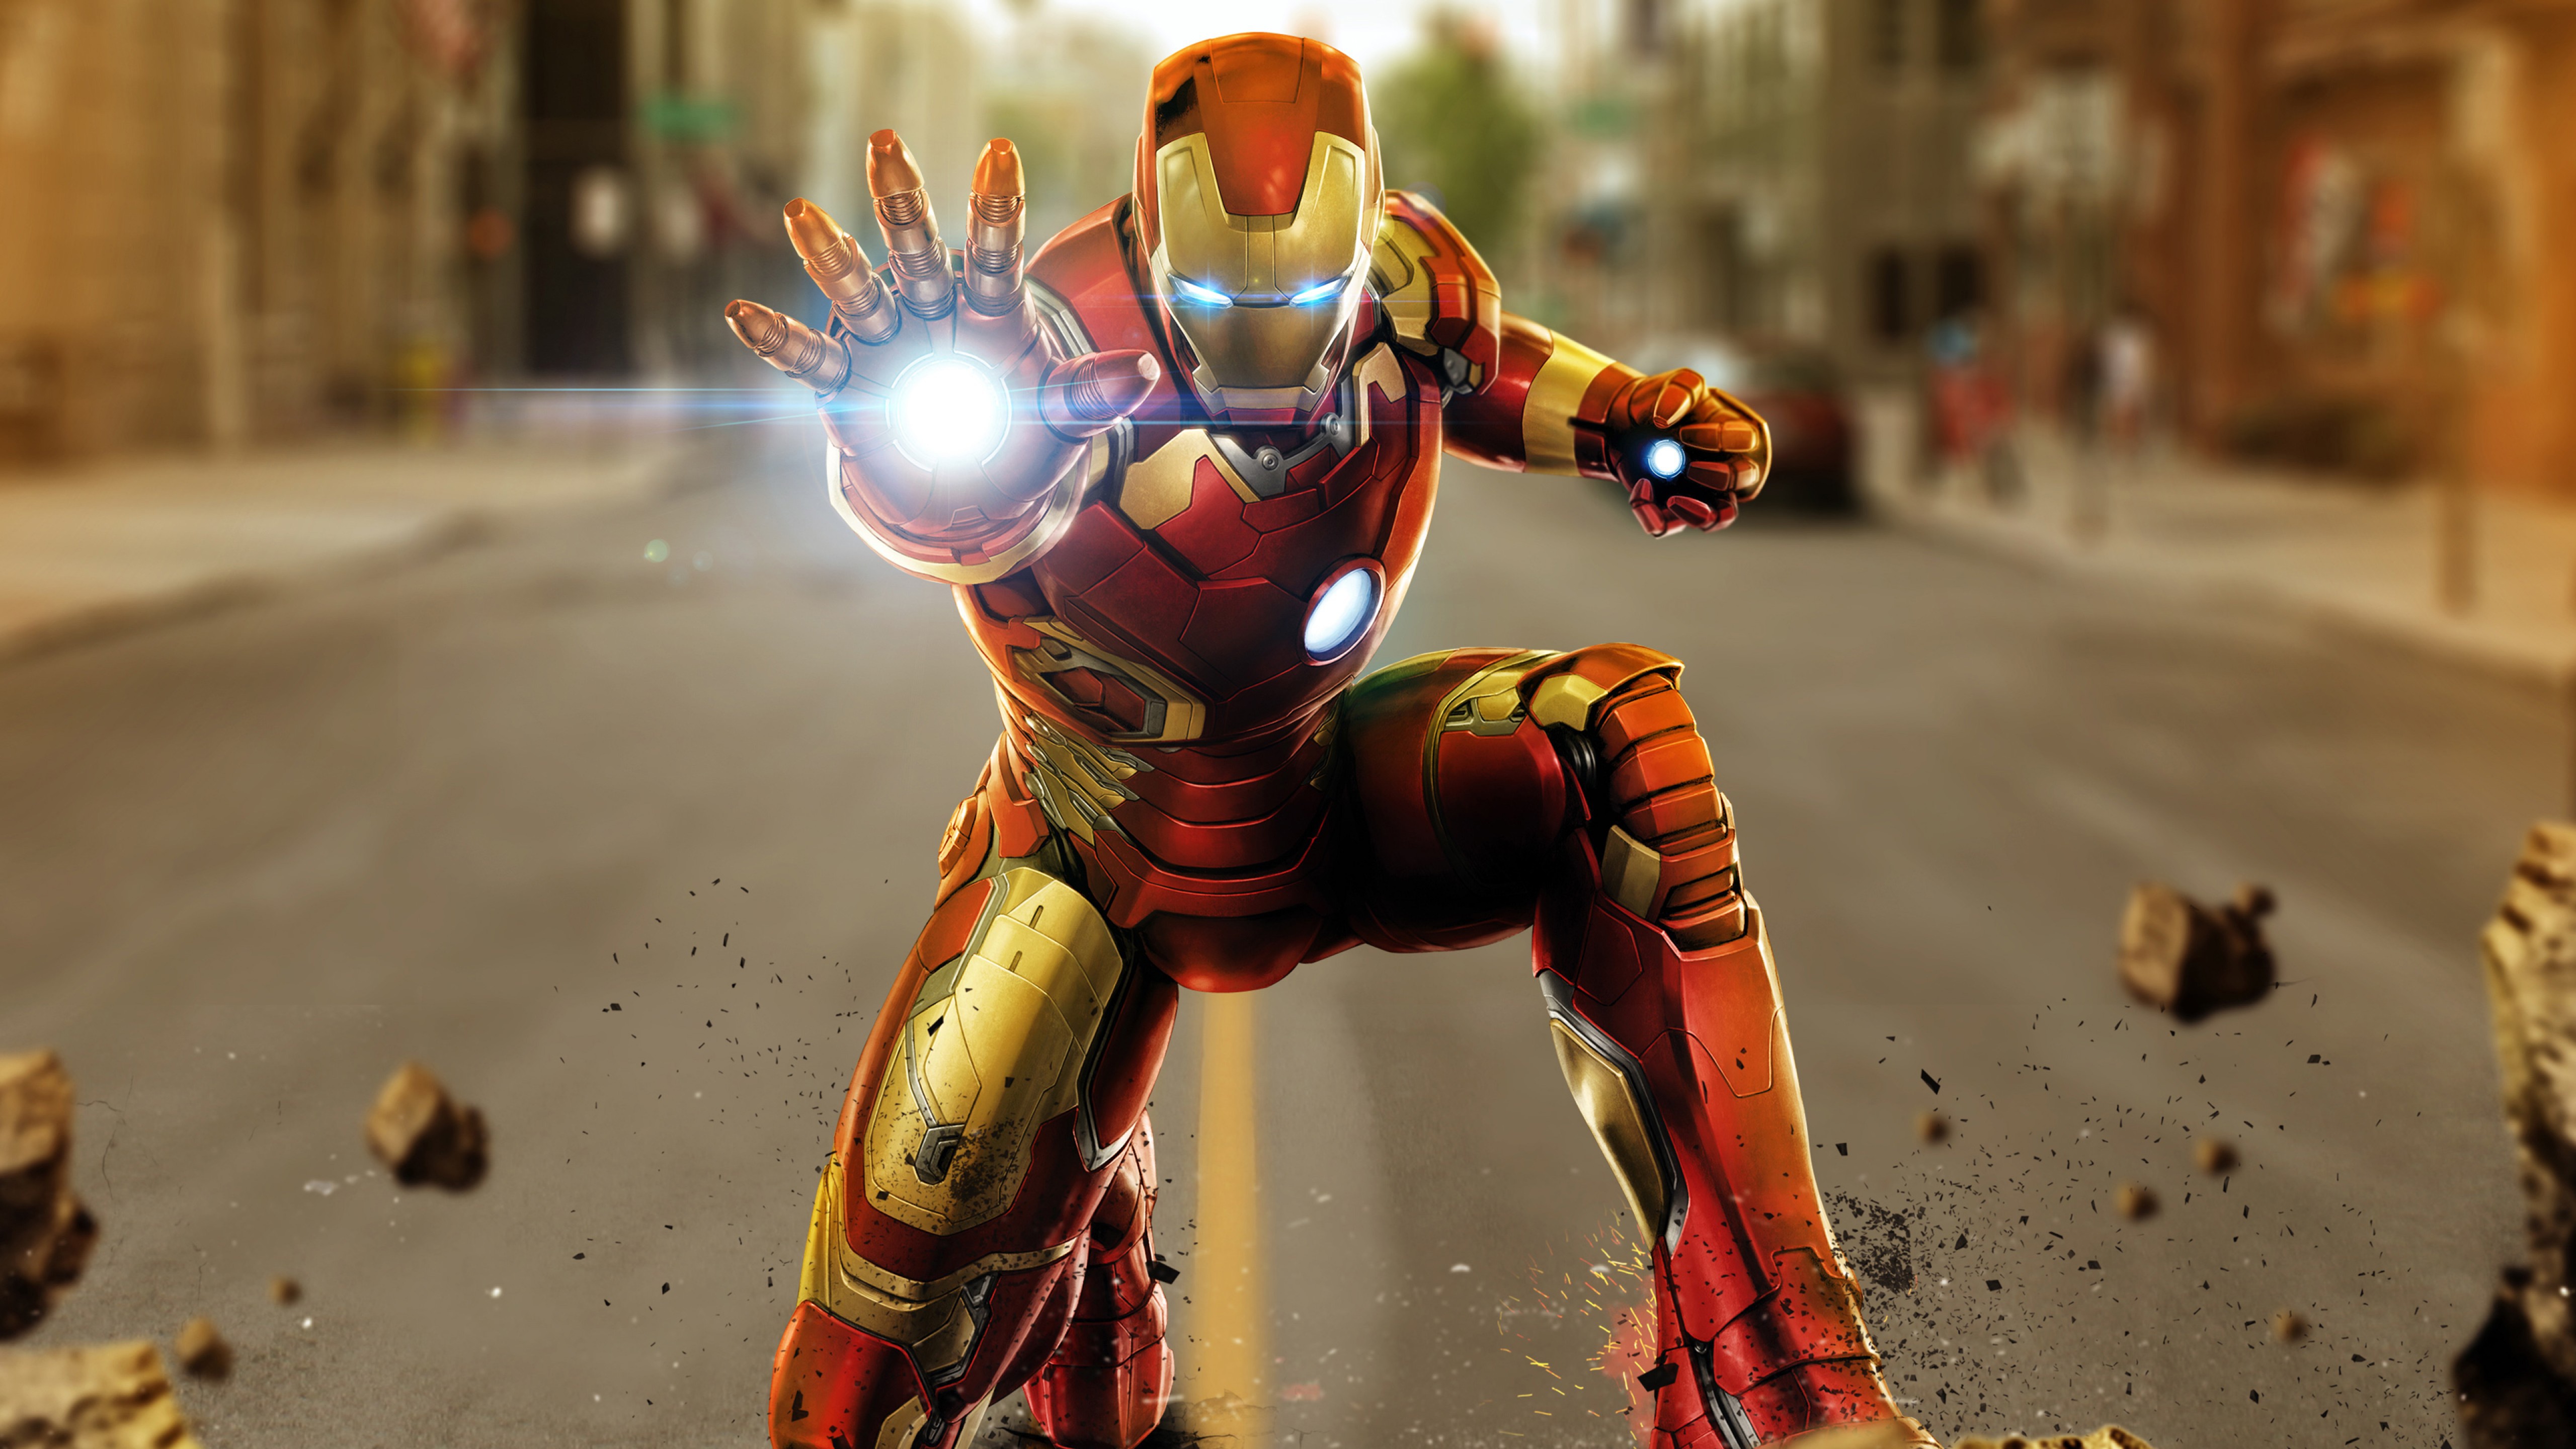 Wallpapers Avengers Iron Man a nanosuit on the desktop